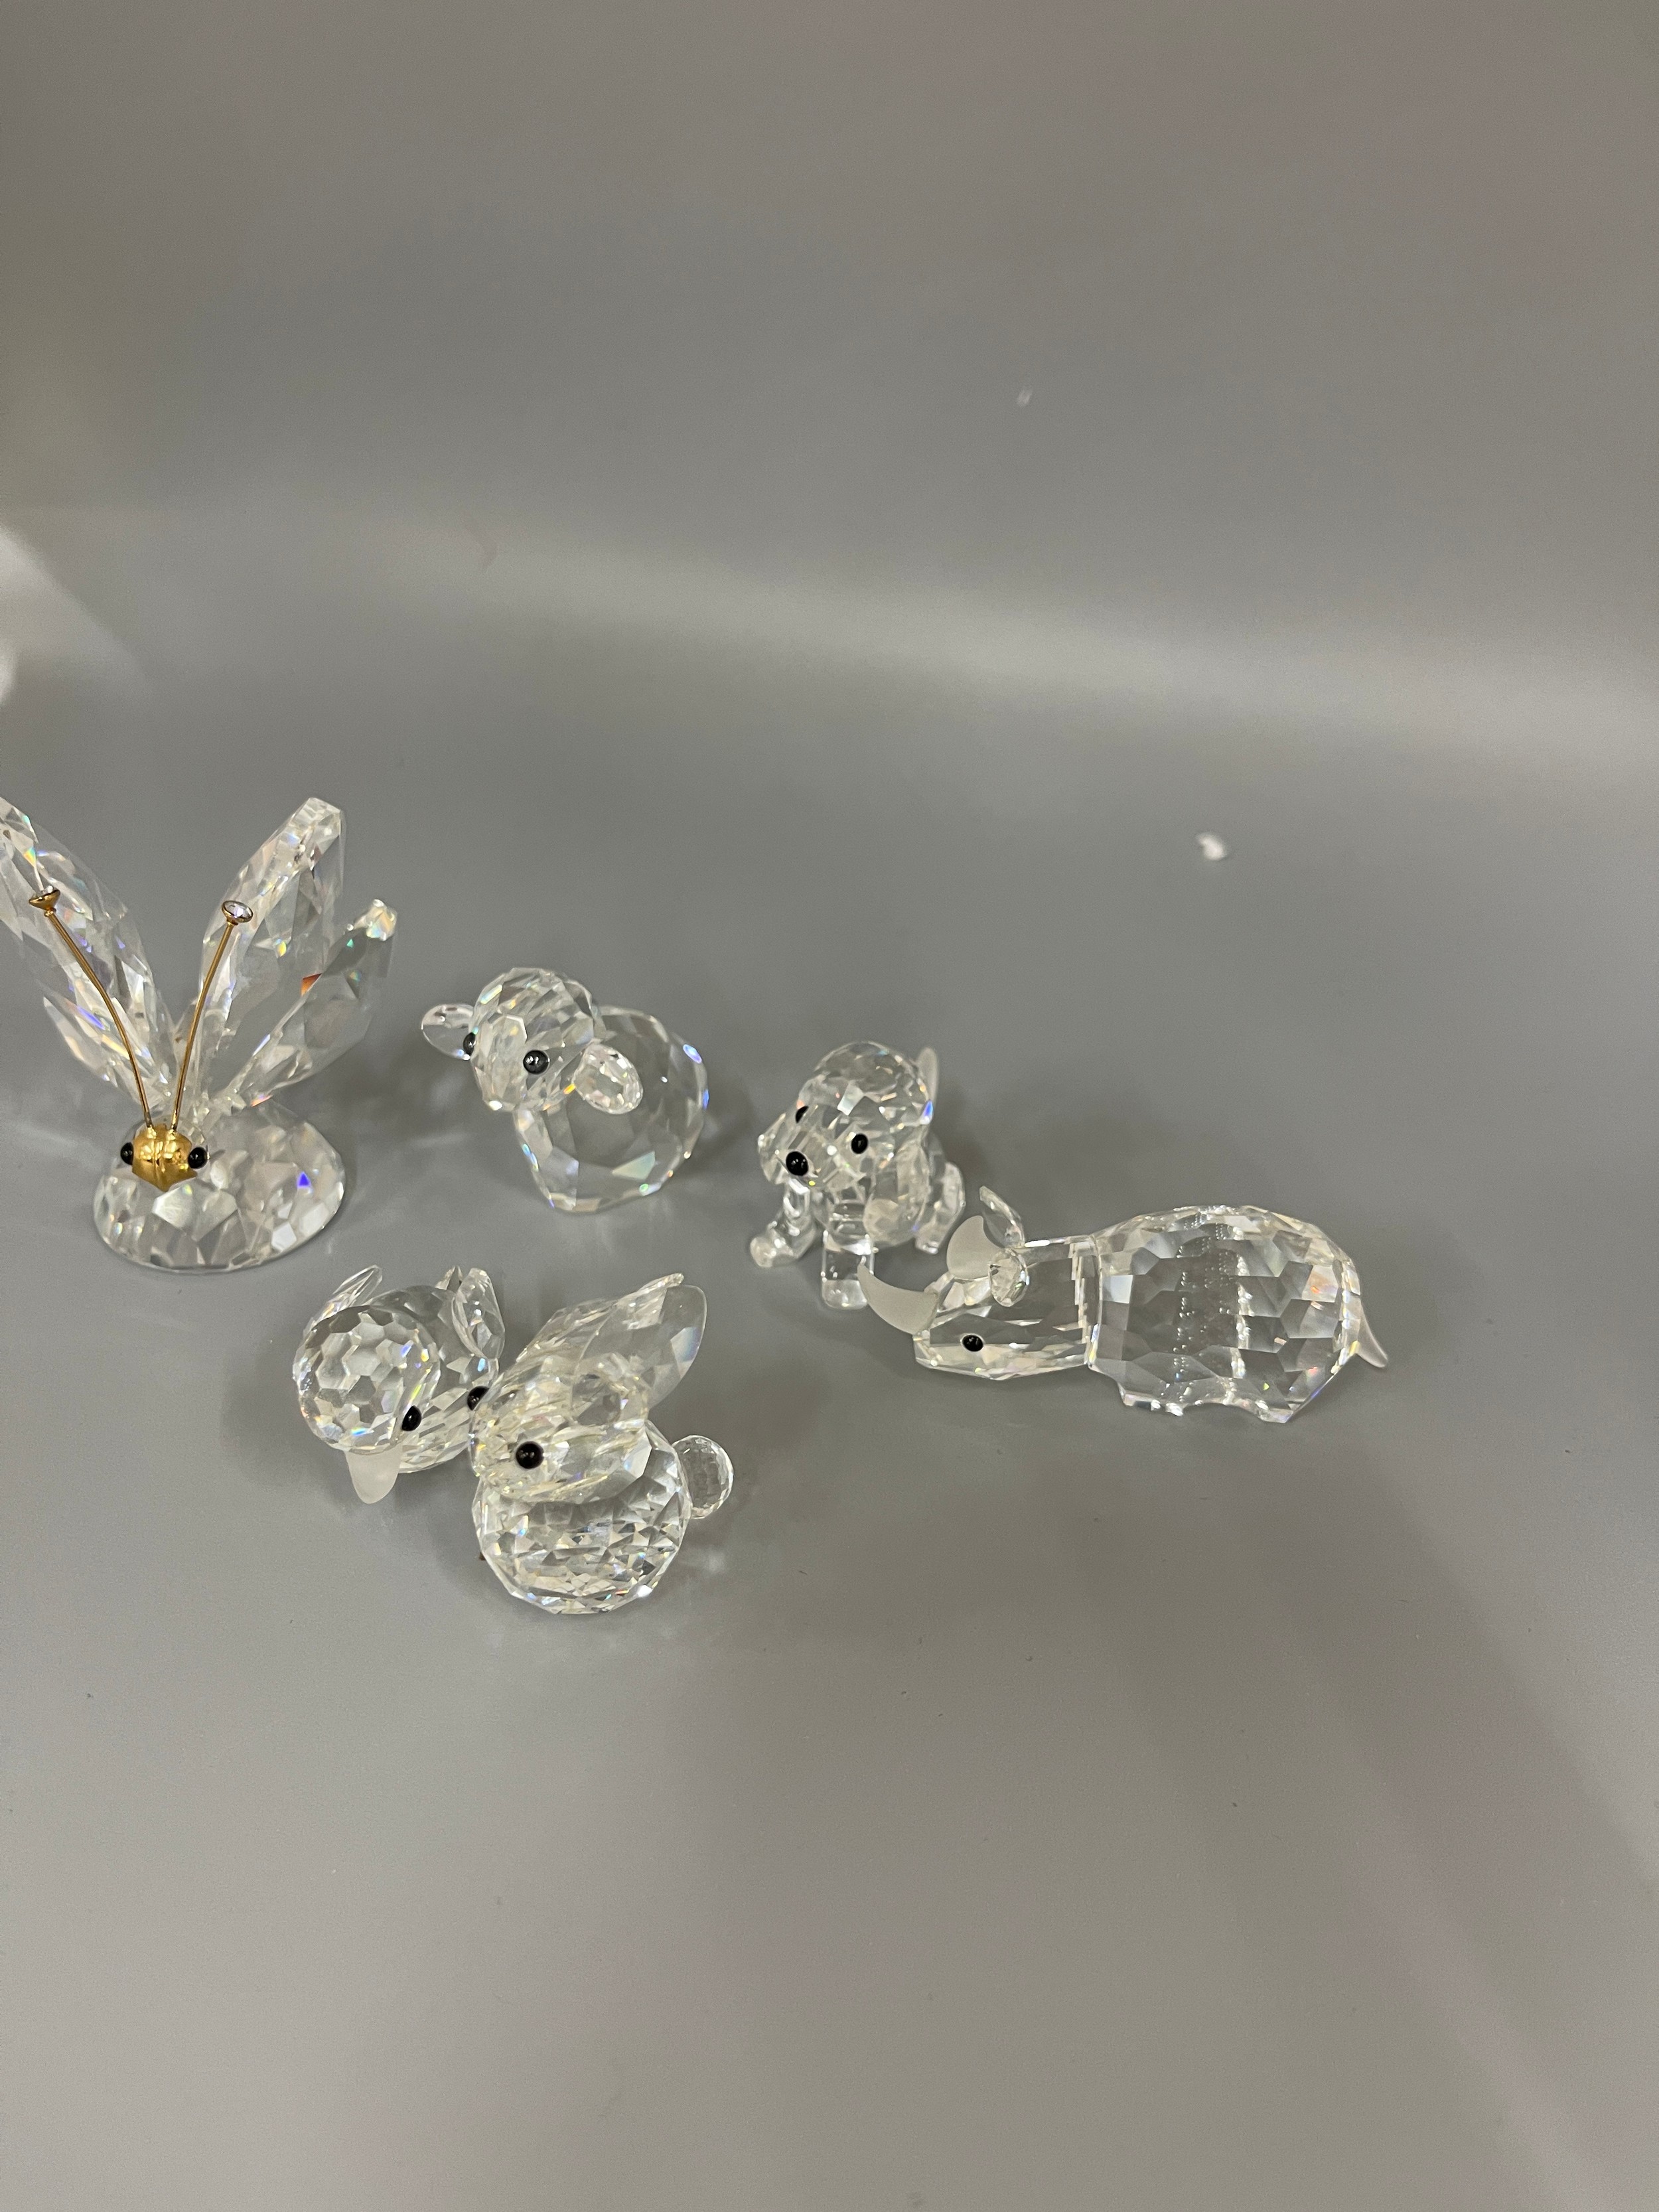 Selection of 6 Swarvoski glass figures includes Butterfly, lamb, rhino etc - Image 2 of 4